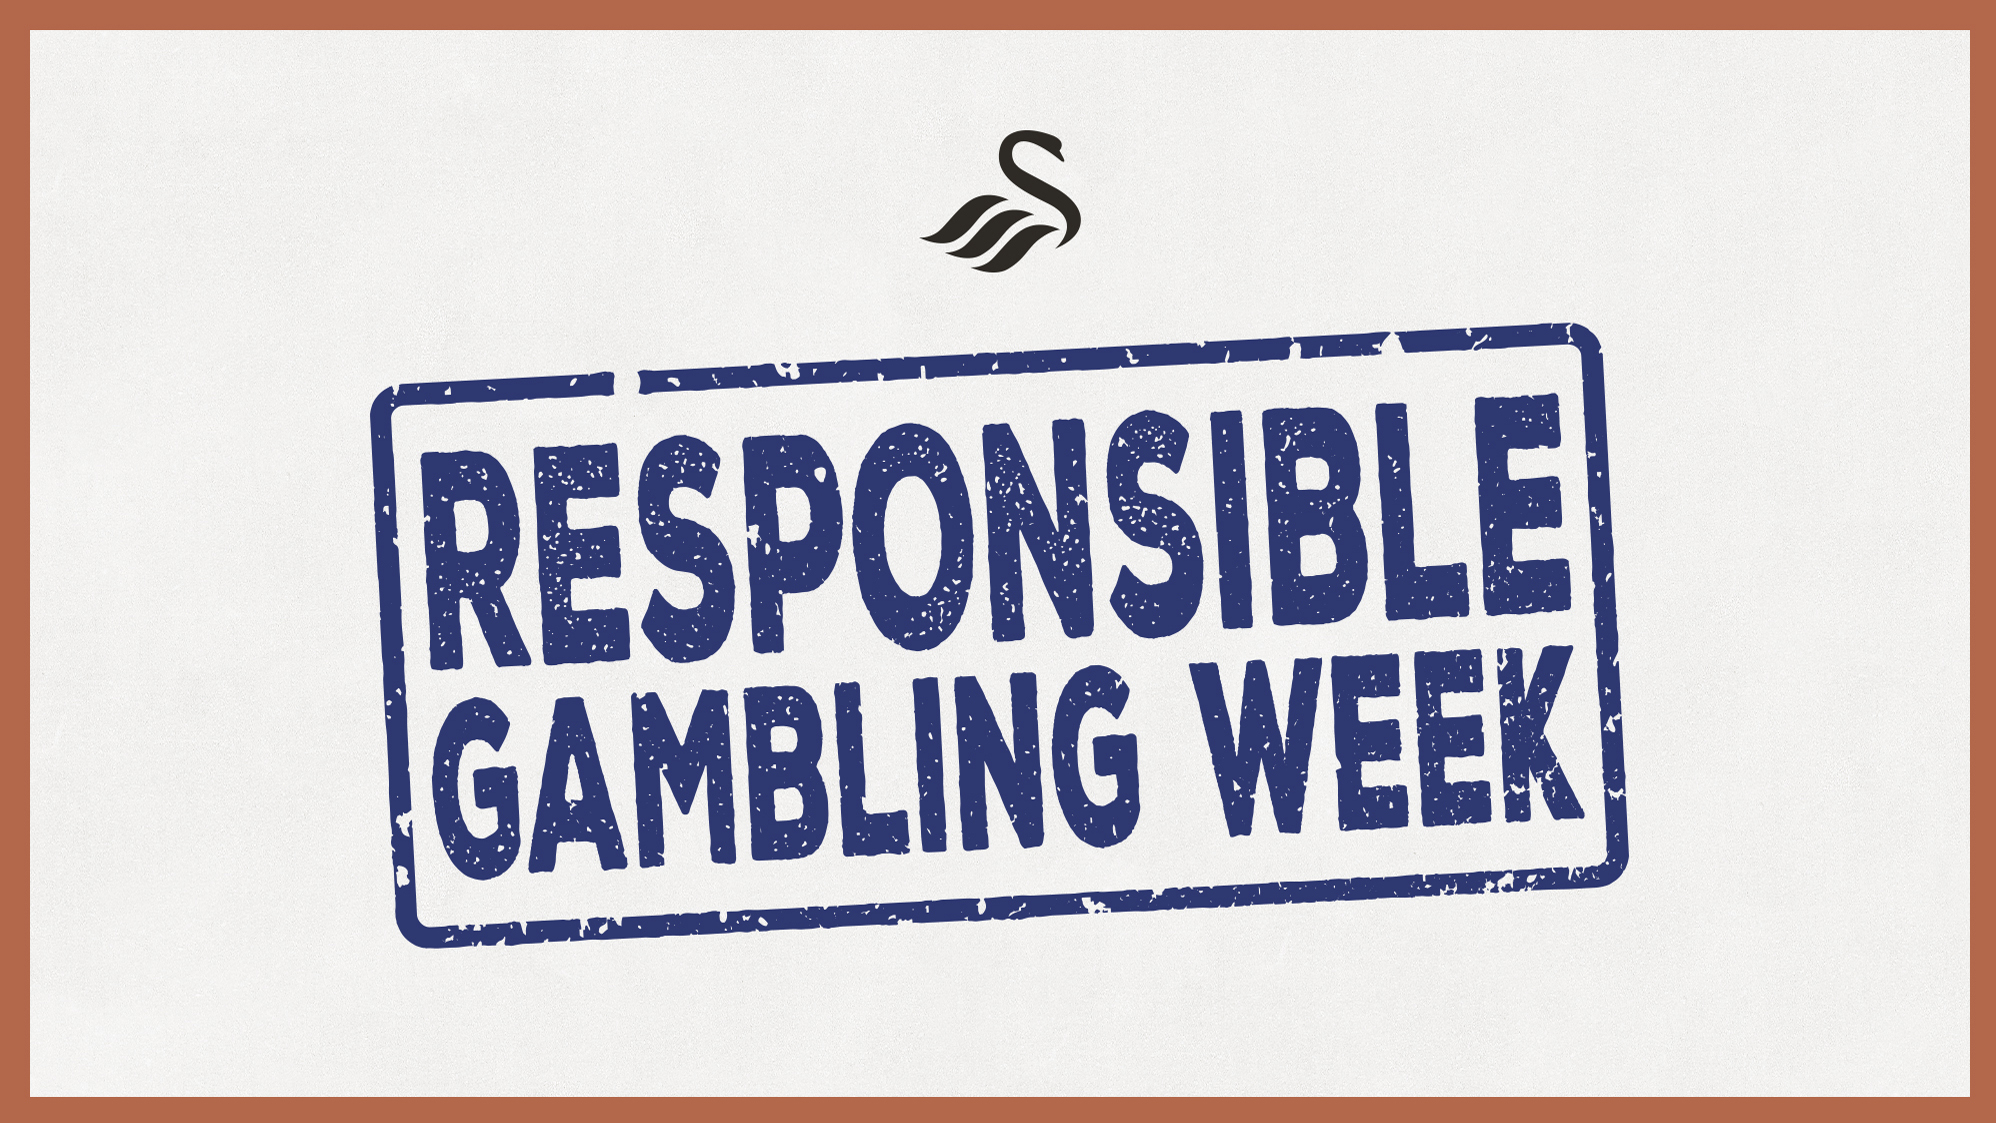 Responsible Gambling Week